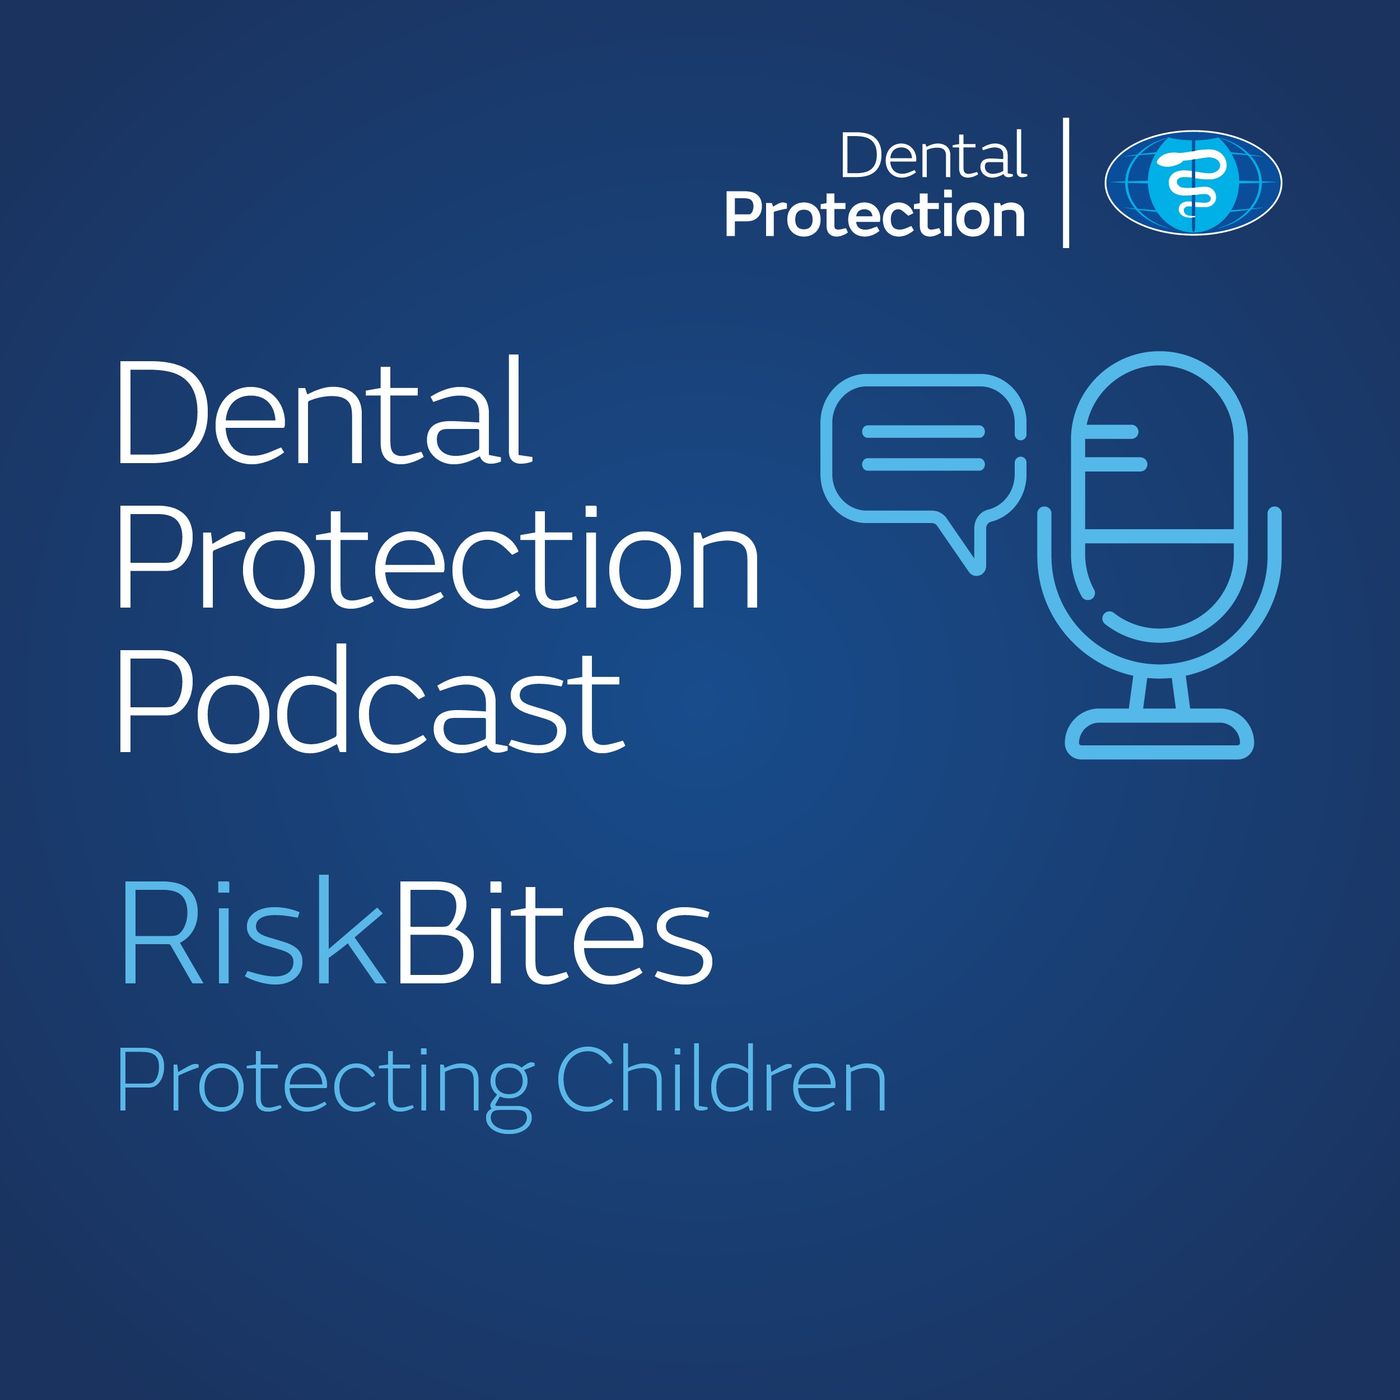 Risk Bites: Protecting Children